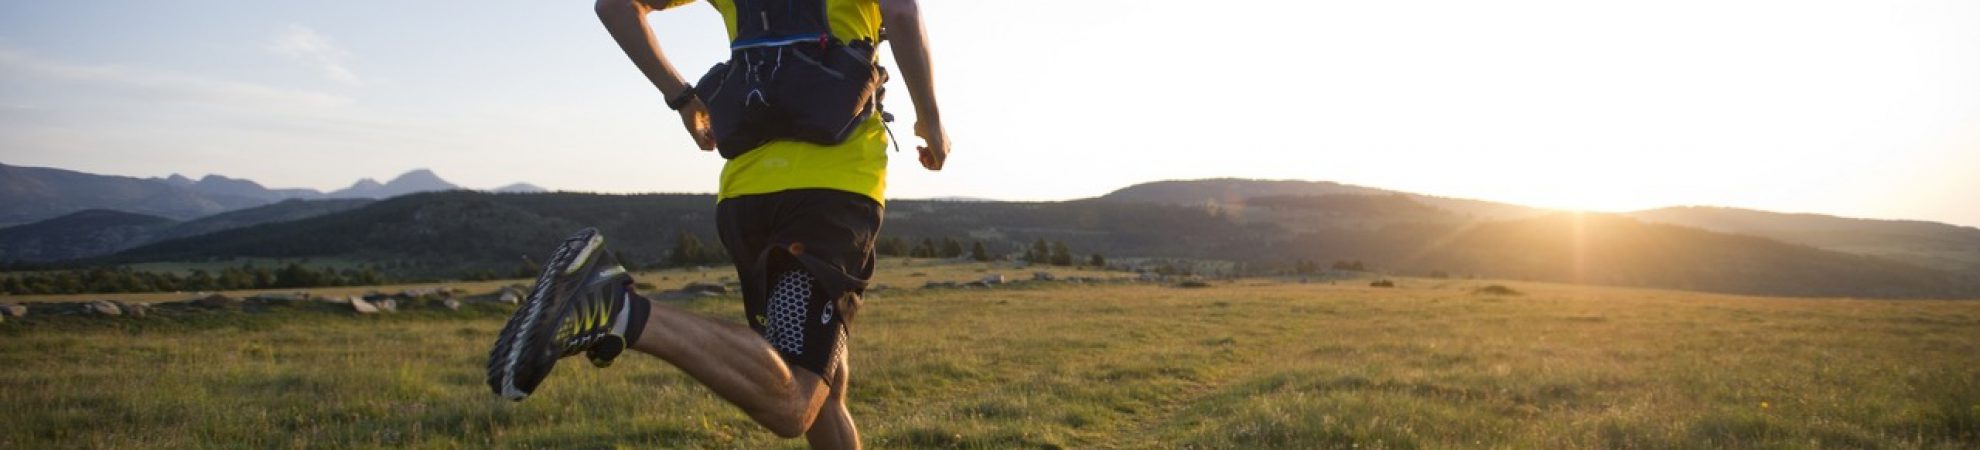 Trail Running Backpacks: 6 of the Best